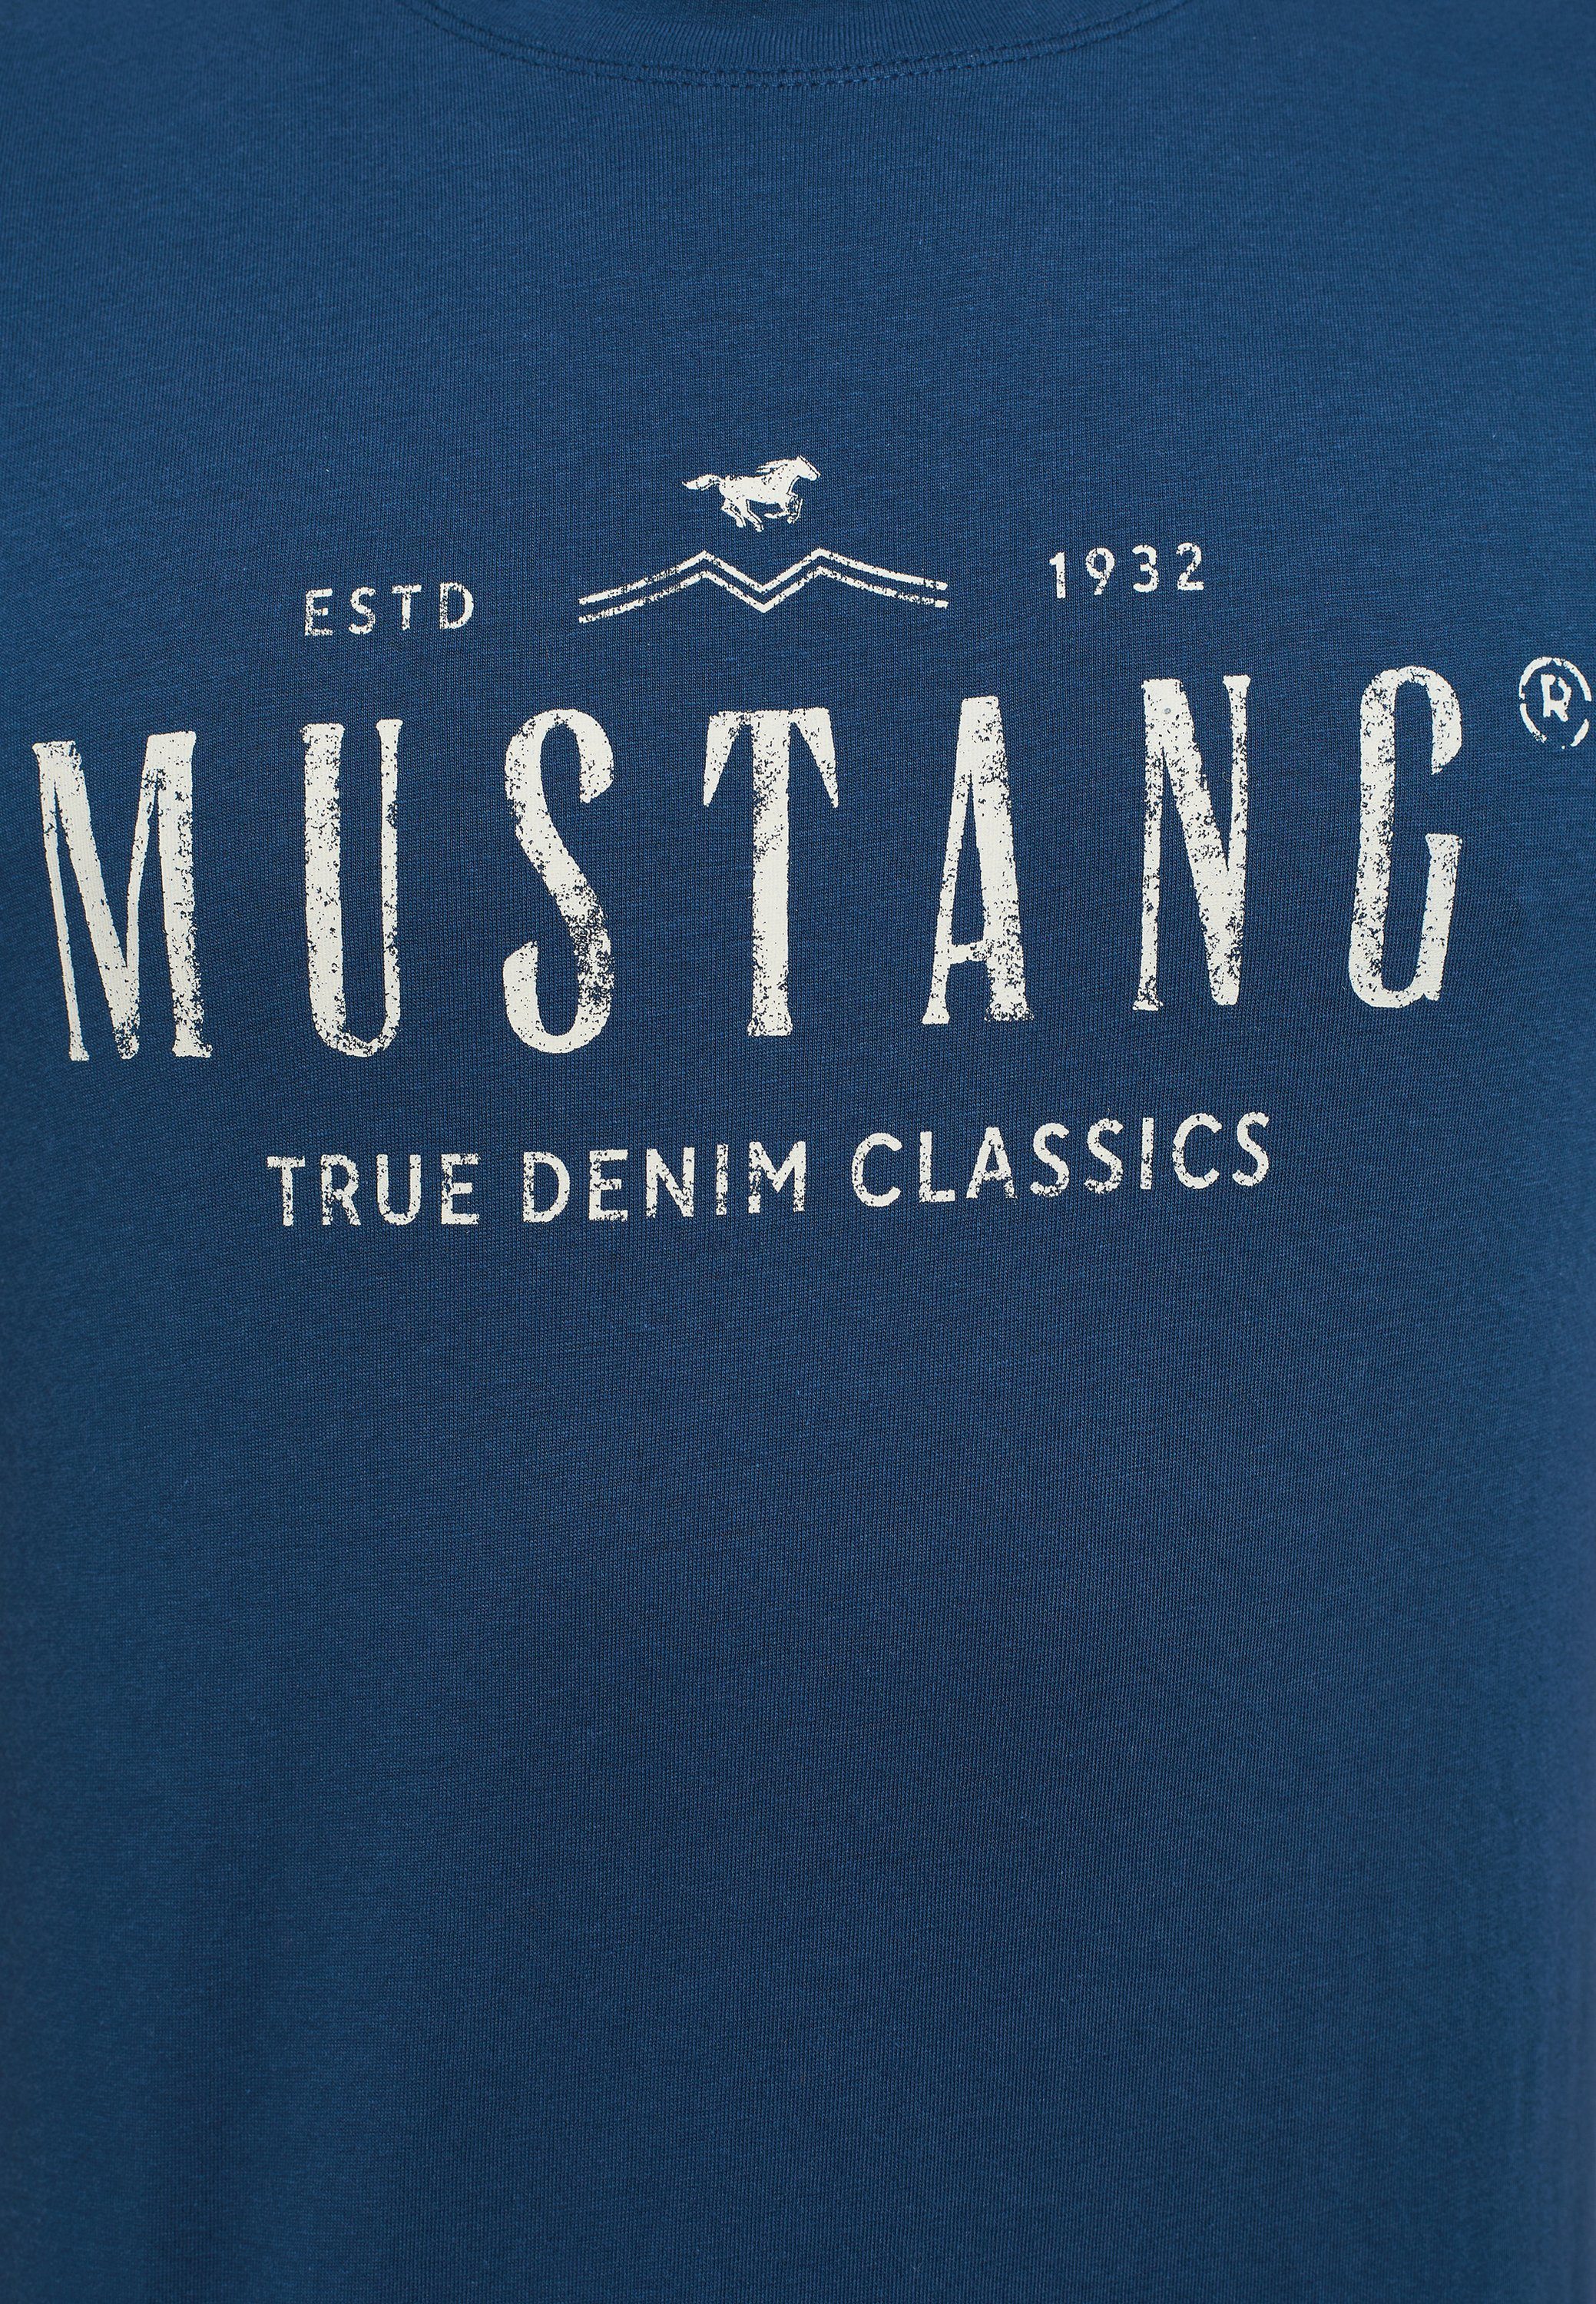 Mustang Print-Shirt navy Kurzarmshirt MUSTANG